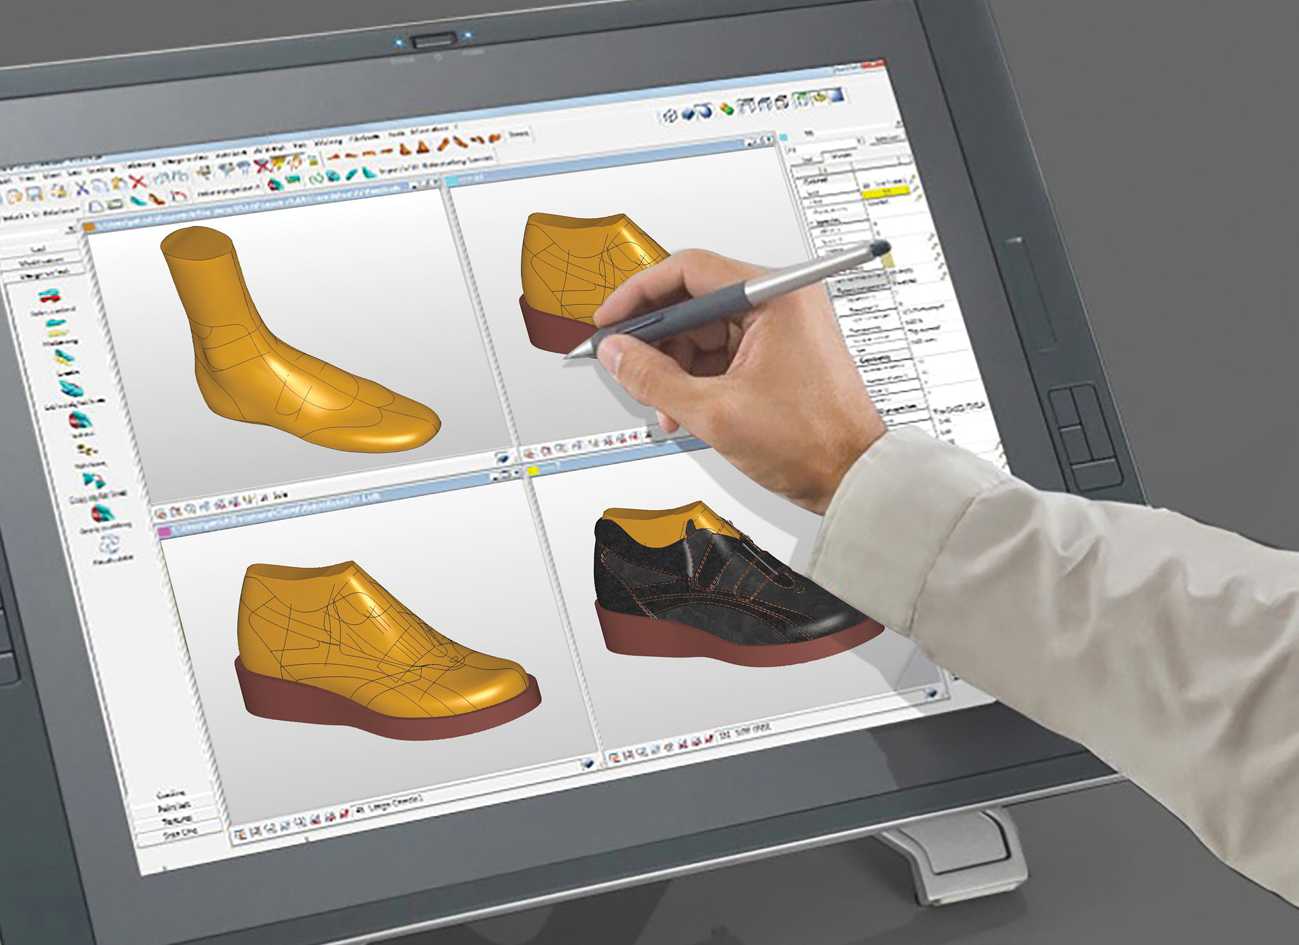 Производство обуви — 6 этапов технологии